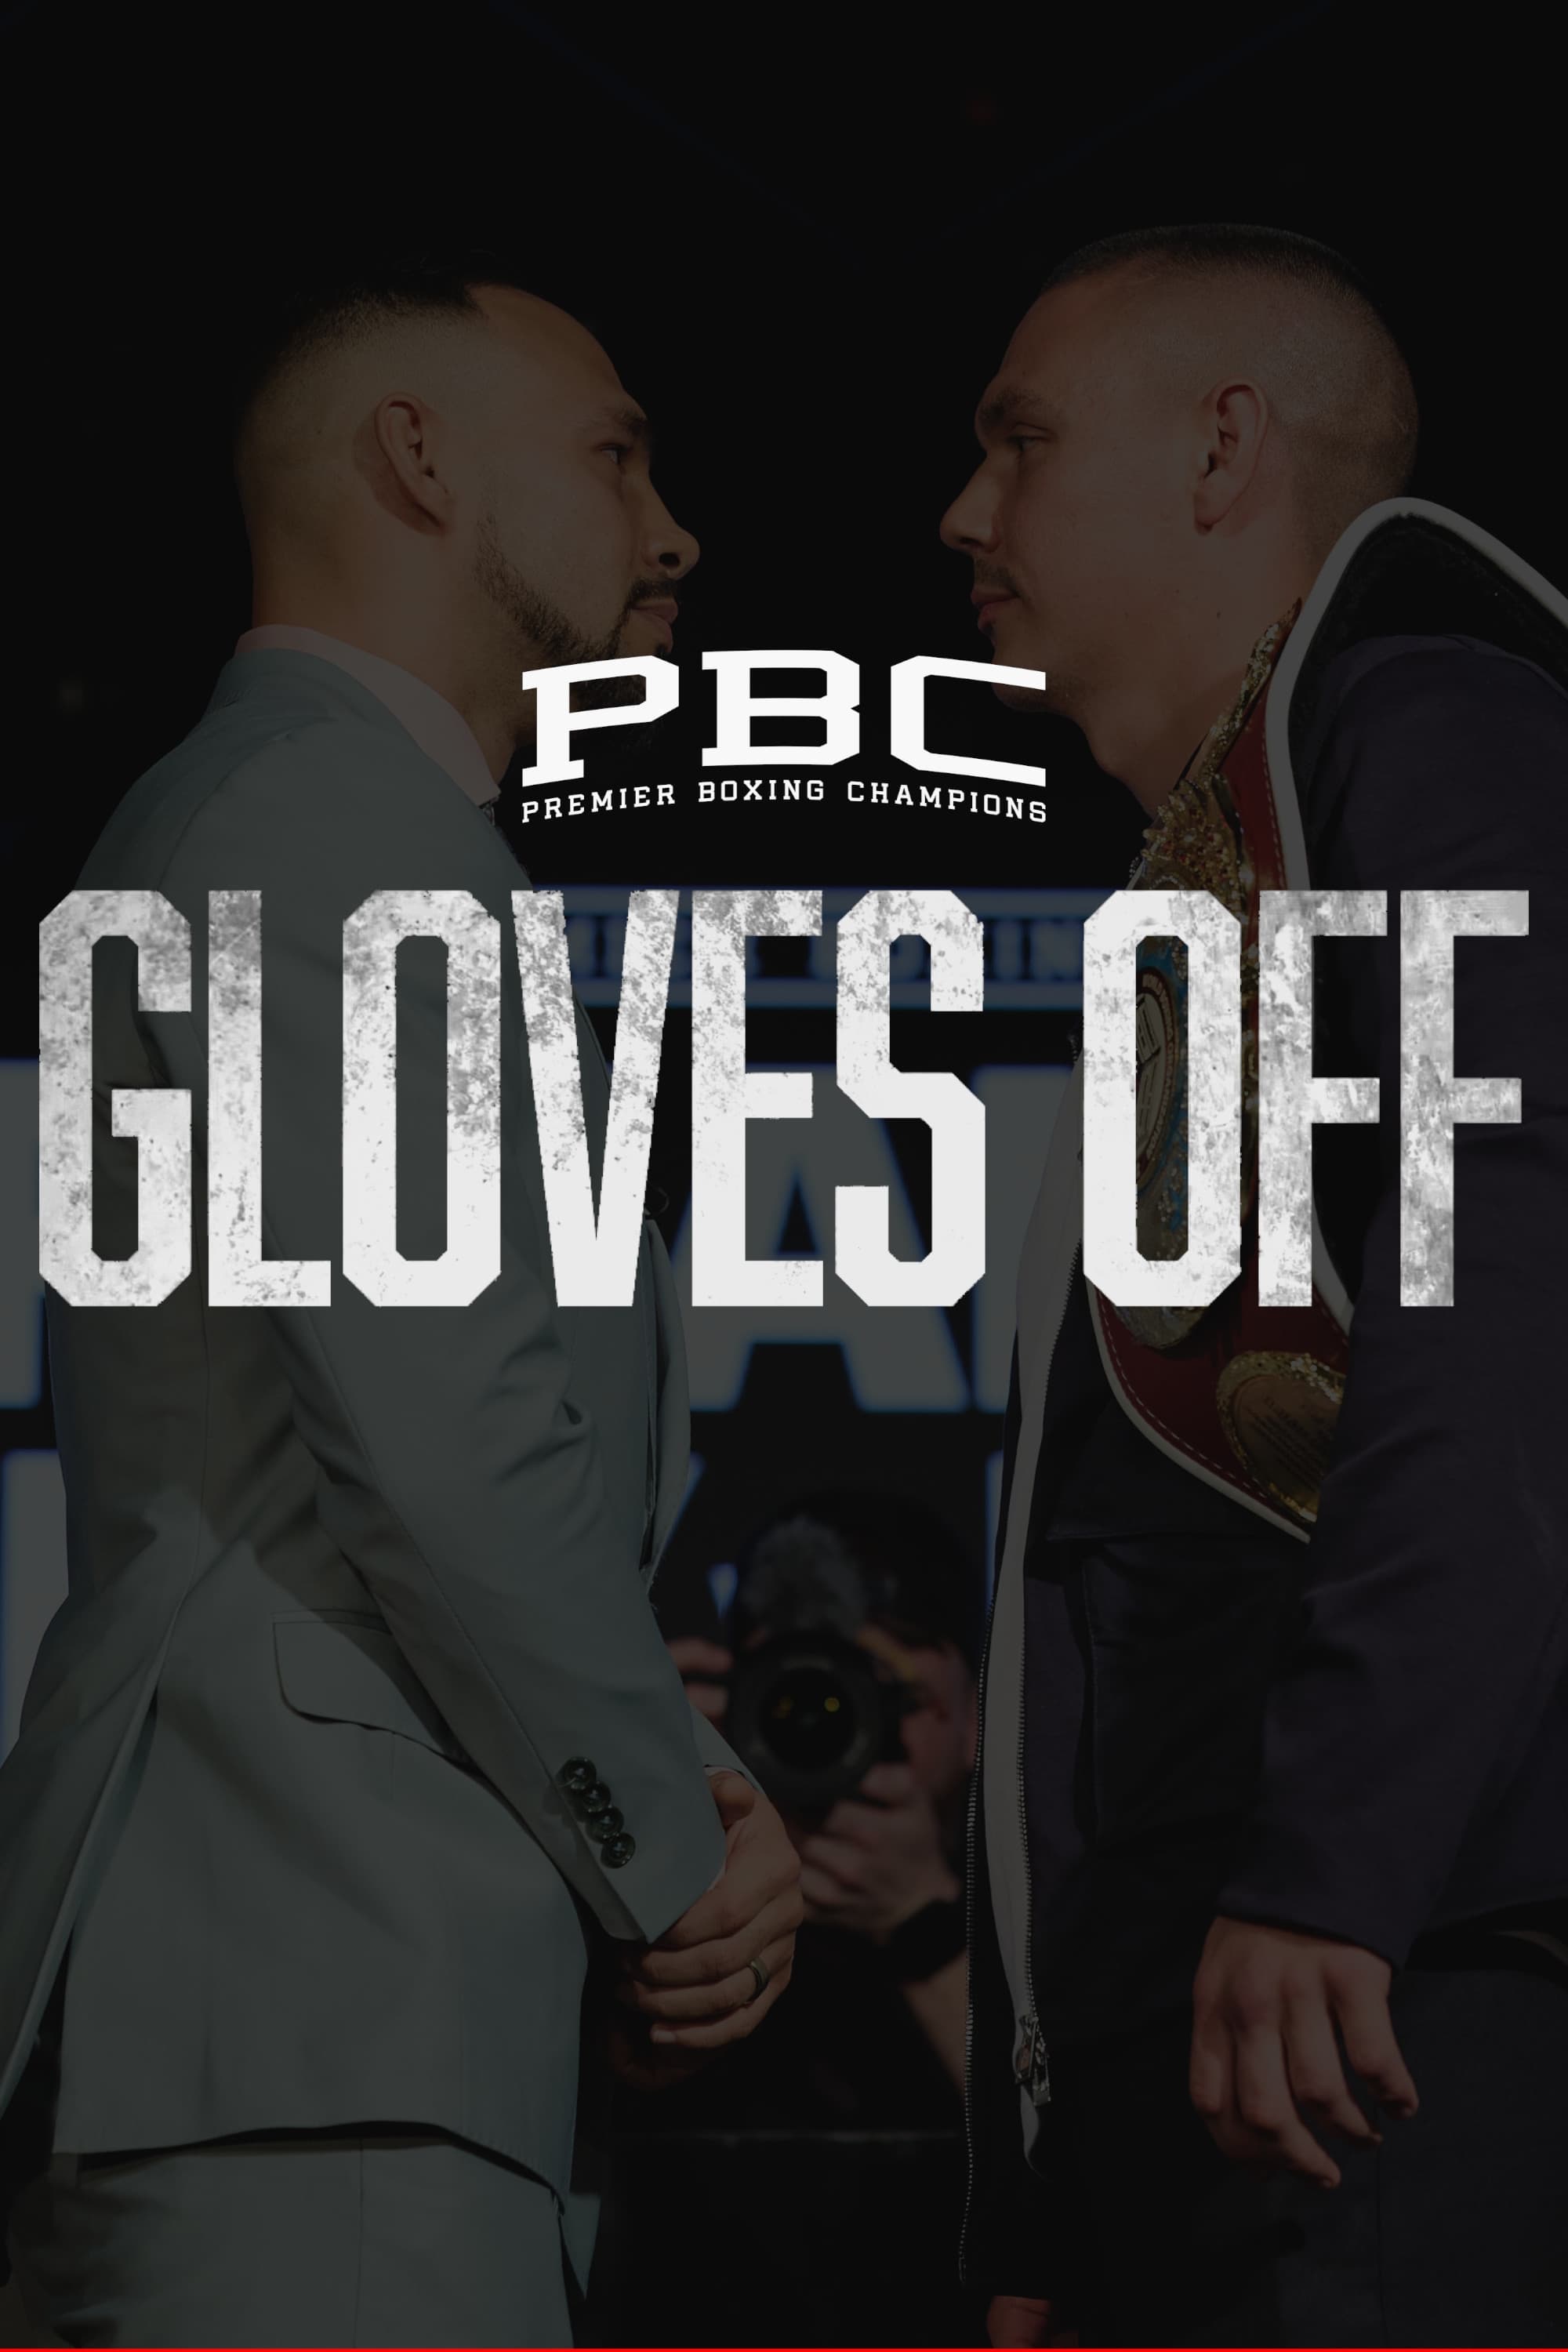 PBC Gloves Off